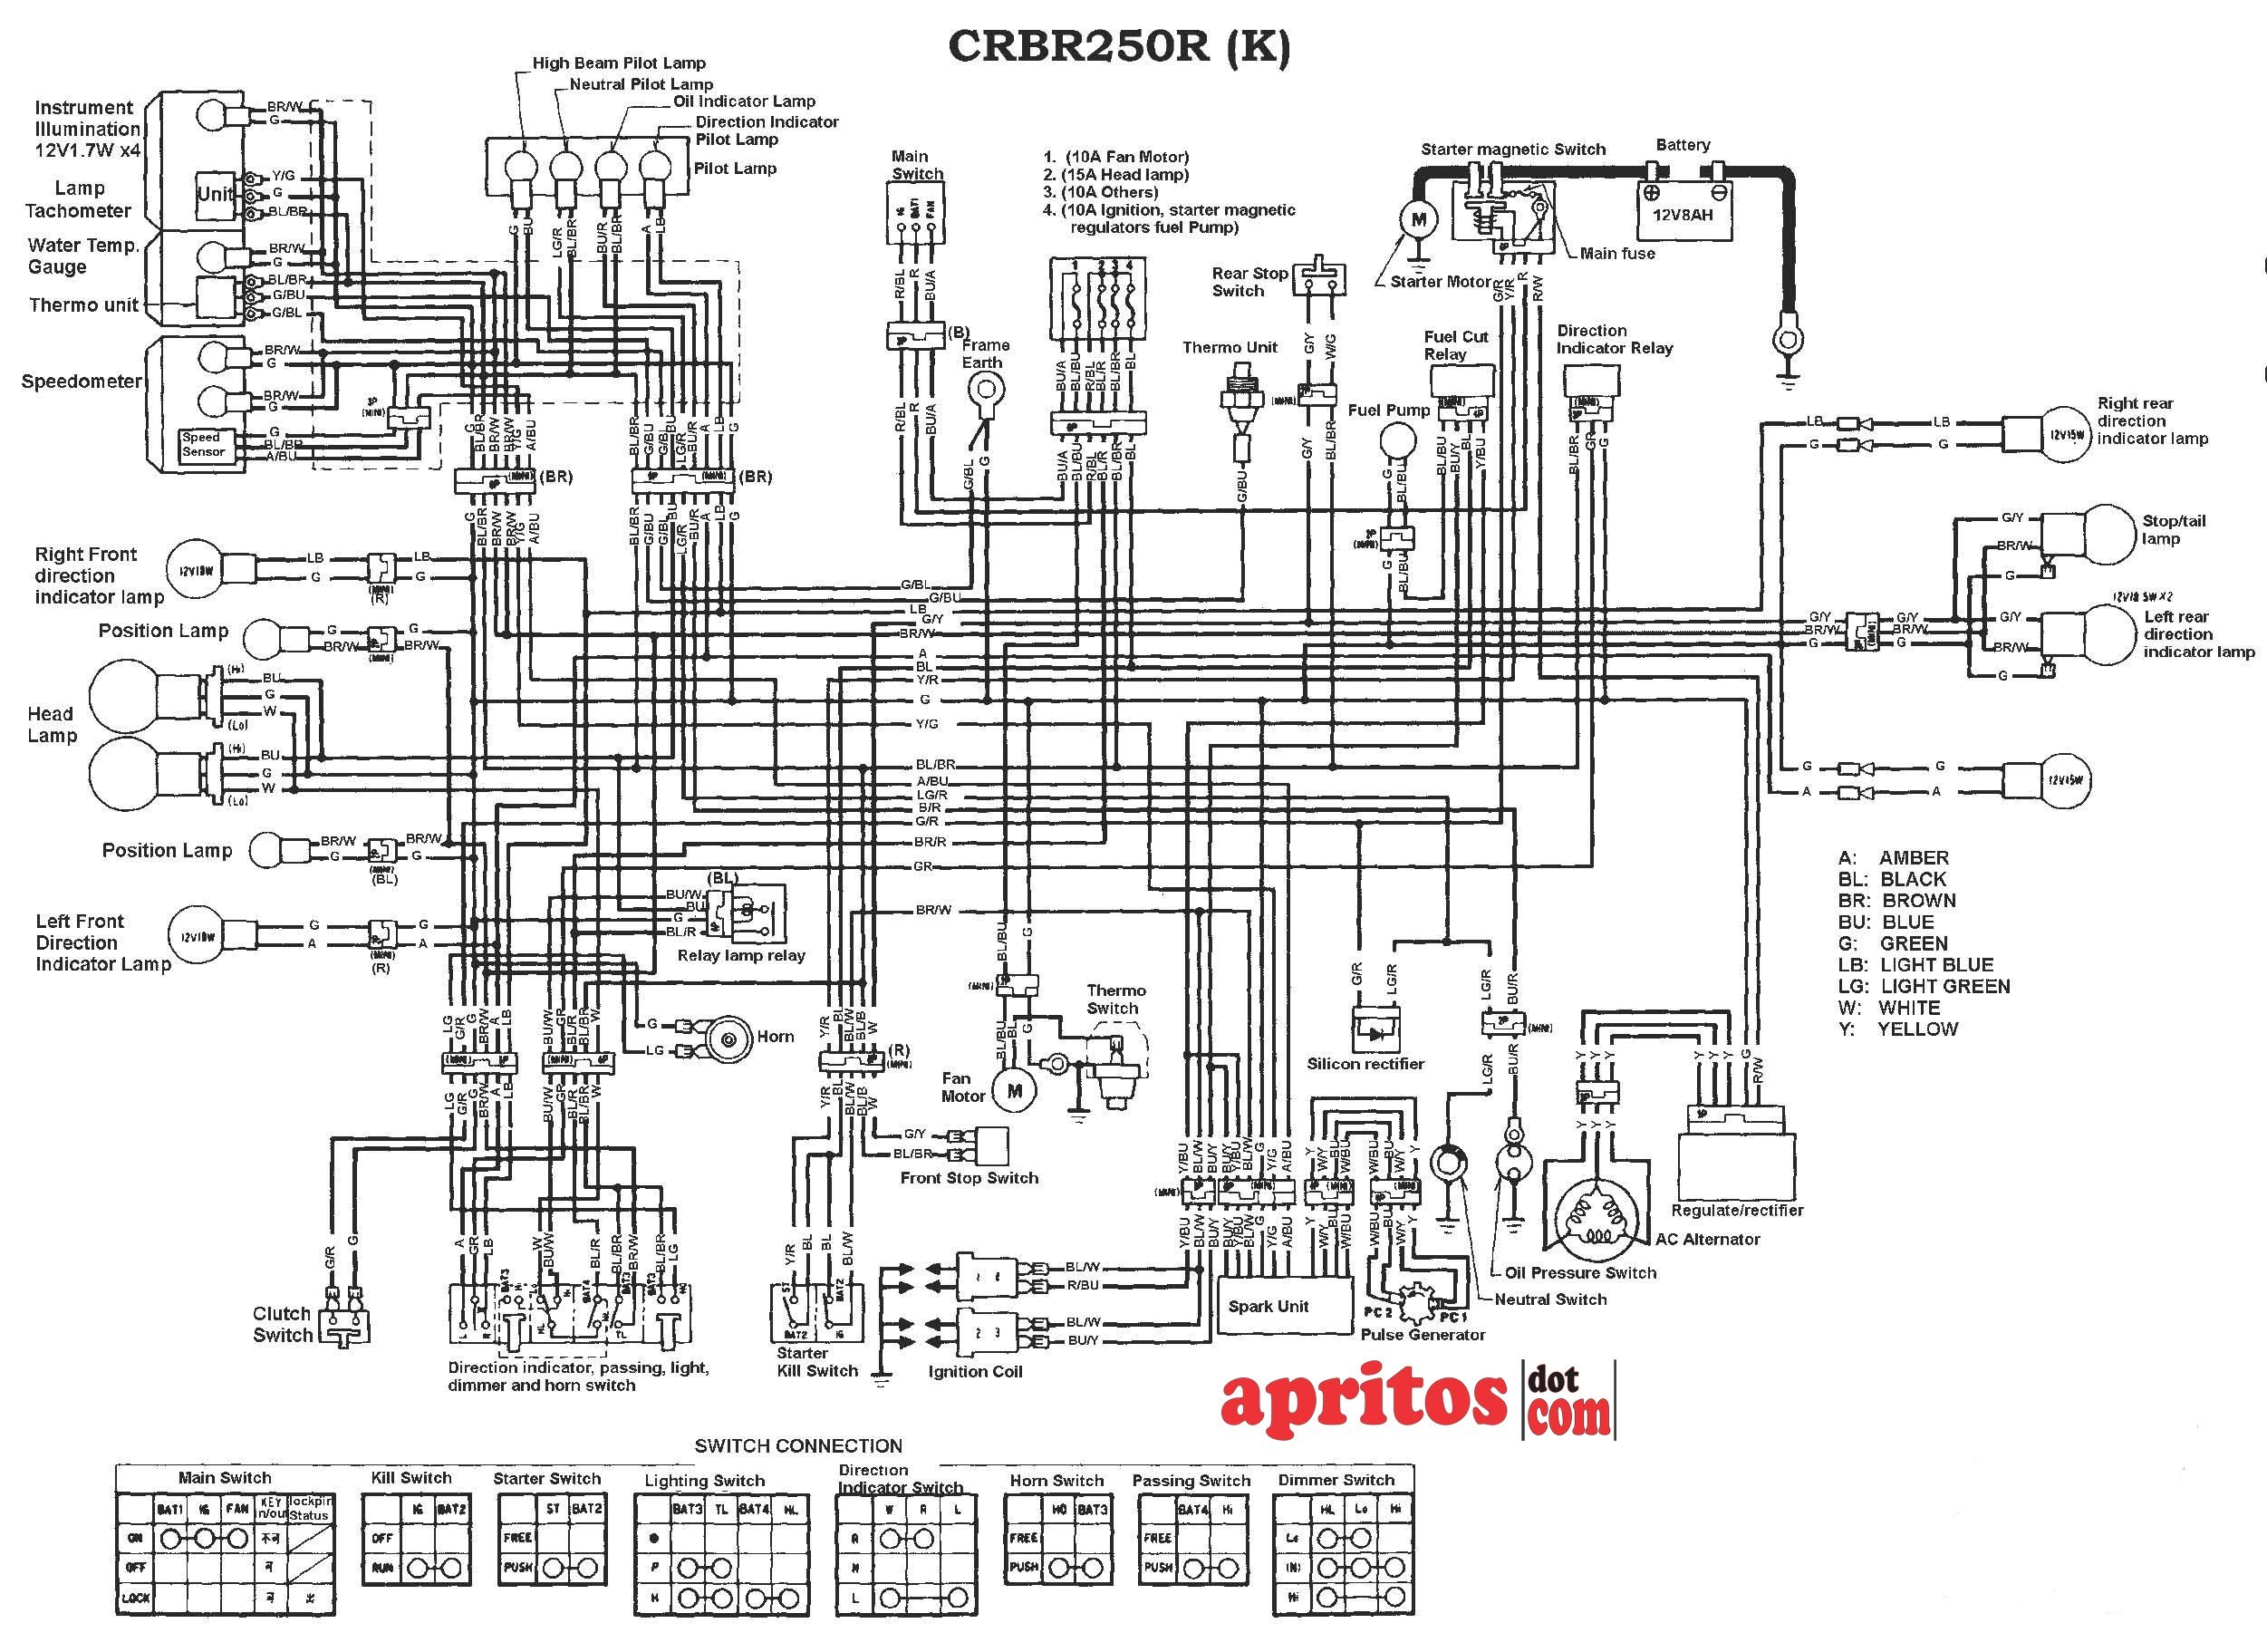 Spitronic Wiring Diagram Diagram] Honda Cbr 125 Wiring Diagram Full Version Hd Of Spitronic Wiring Diagram